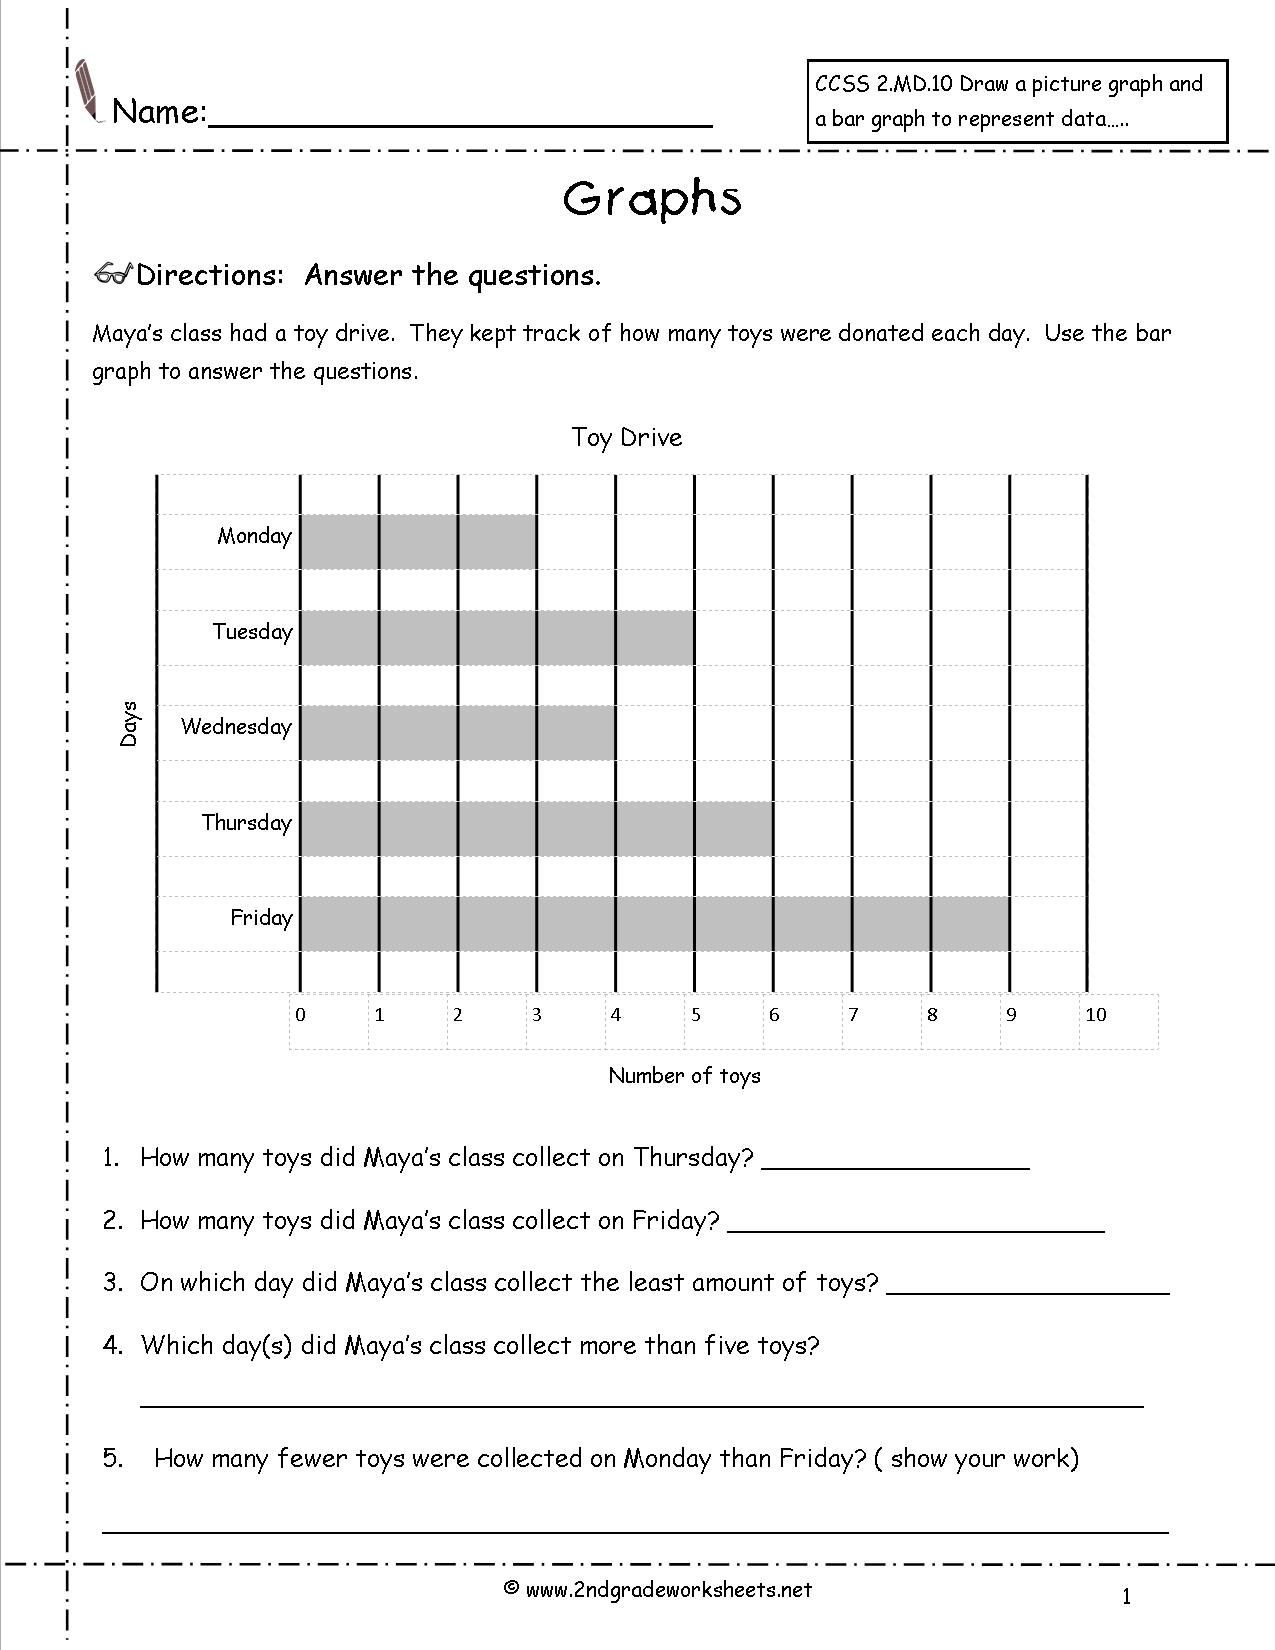 16 Sample Bar Graph Worksheet Templates | Free Pdf Documents | Blank Bar Graph Printable Worksheets